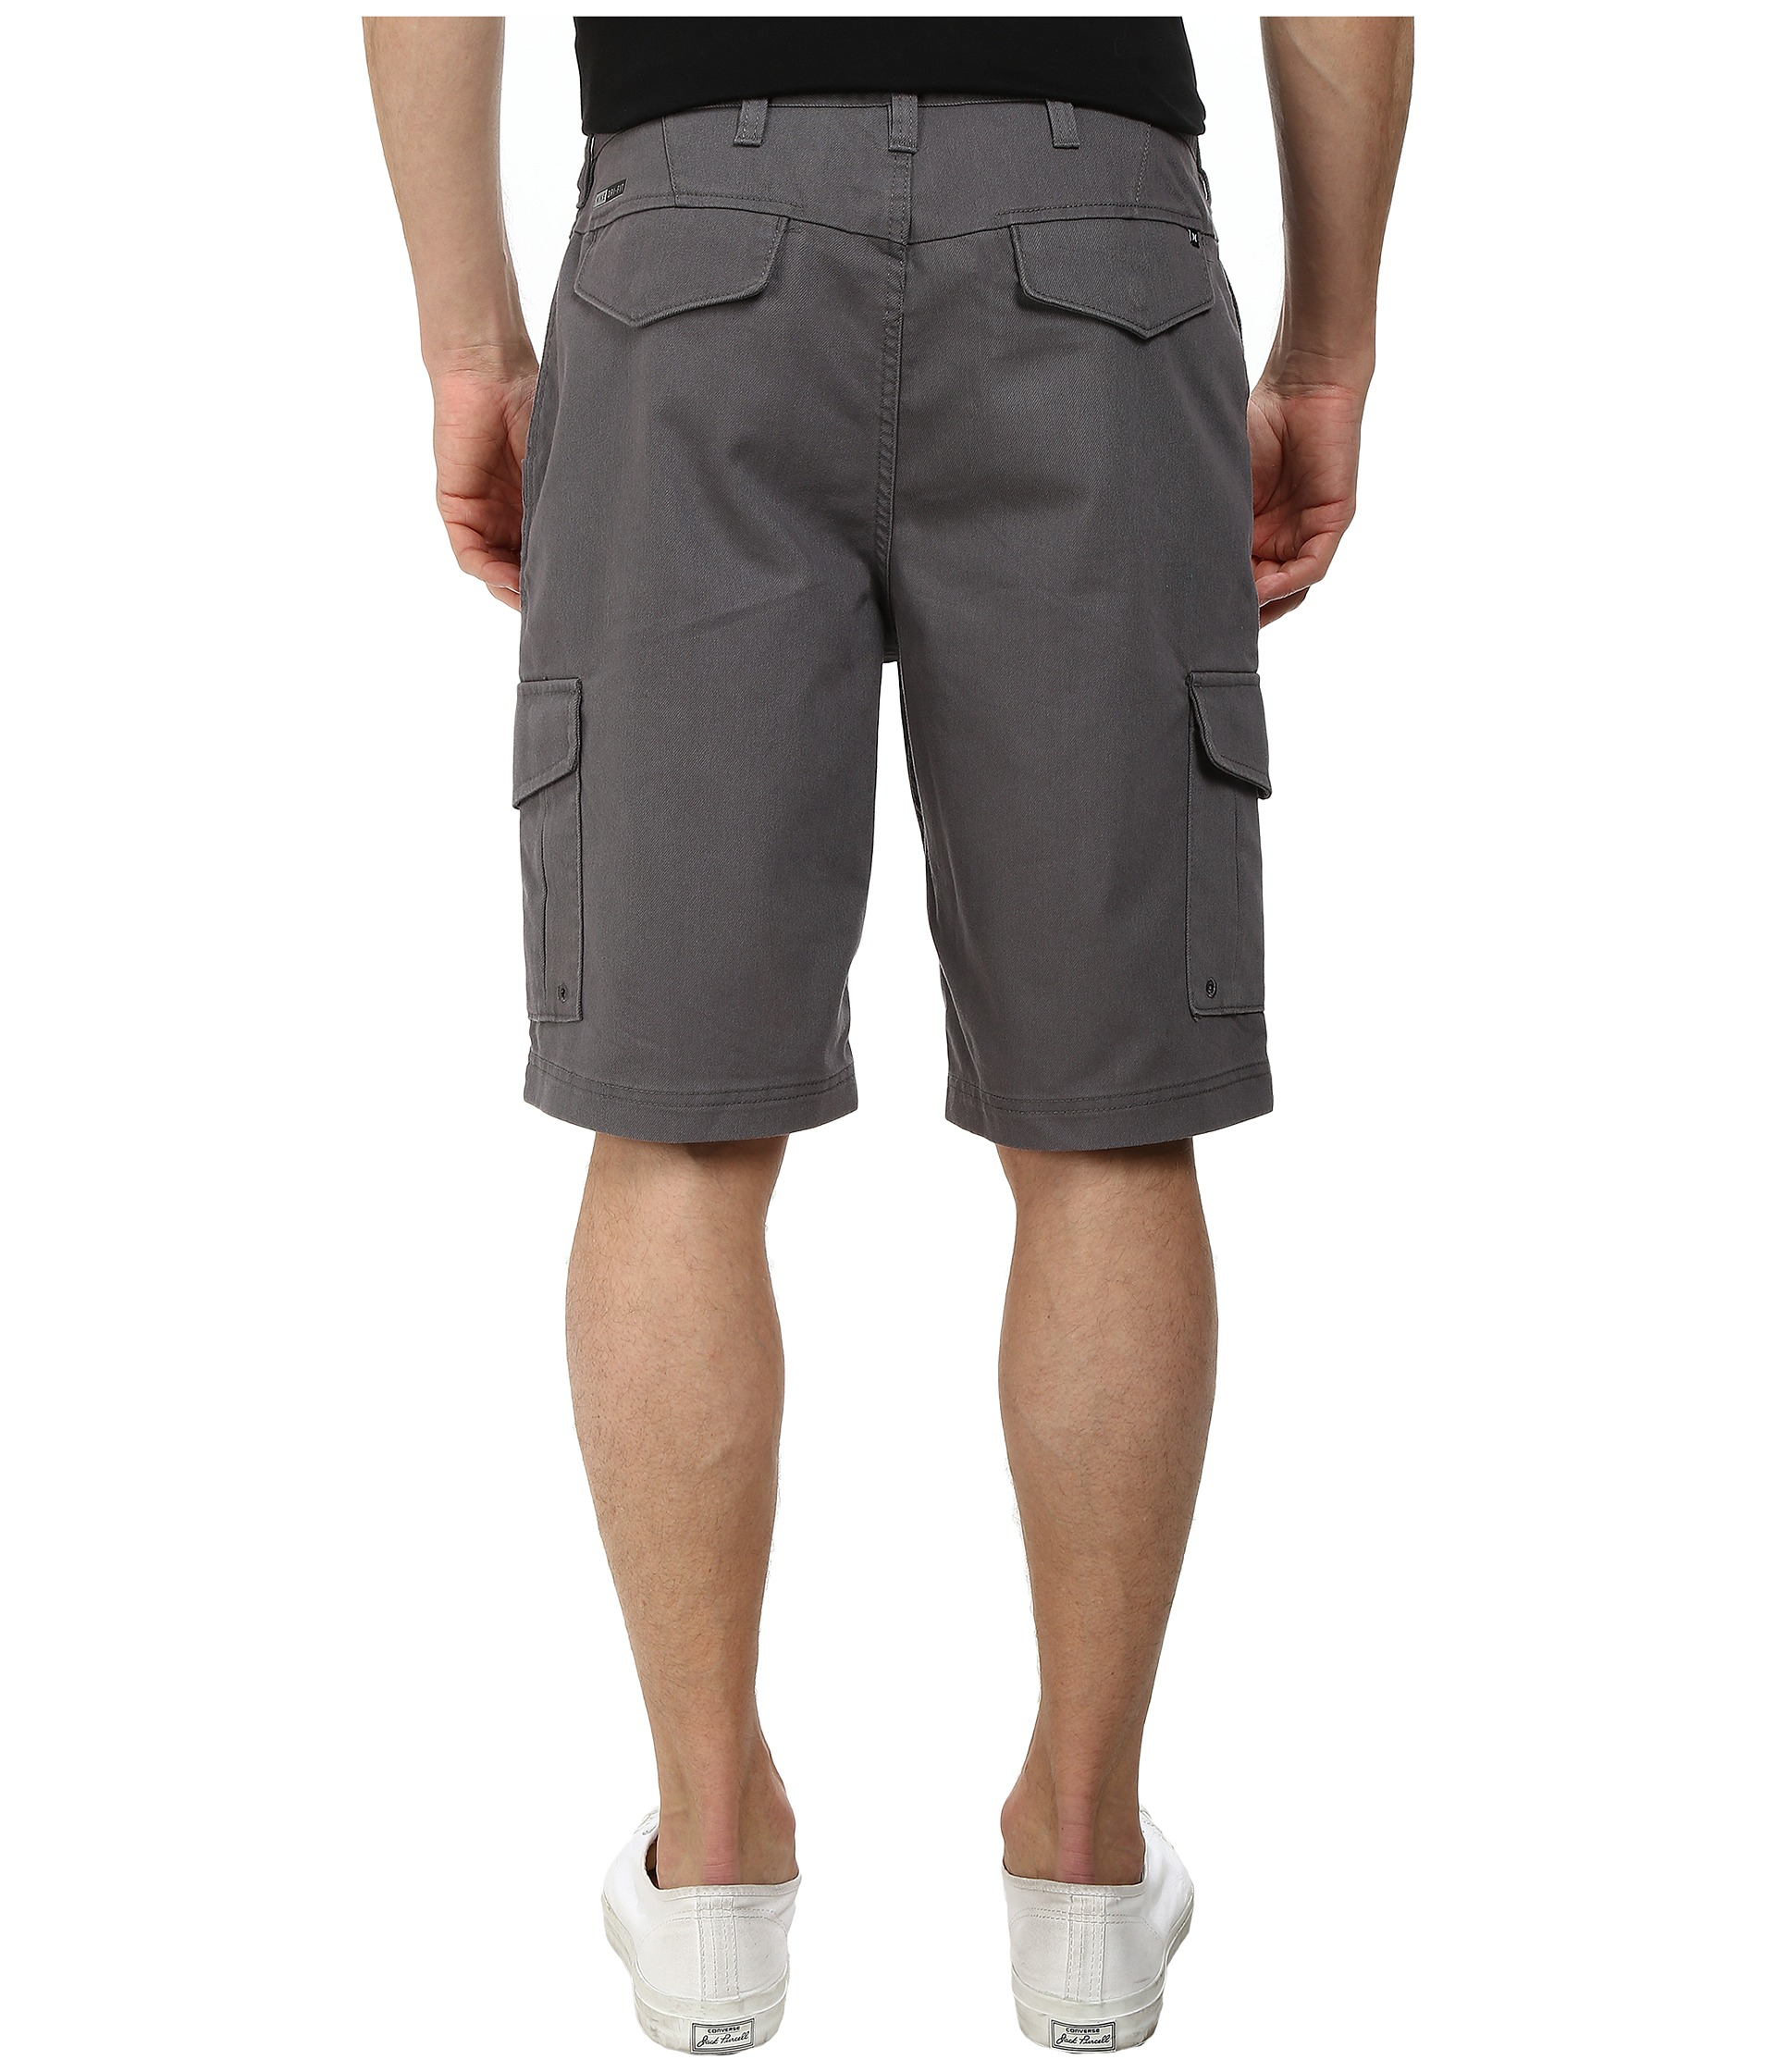 Lyst - Hurley Dri-fit Gi Cargo Short in Gray for Men